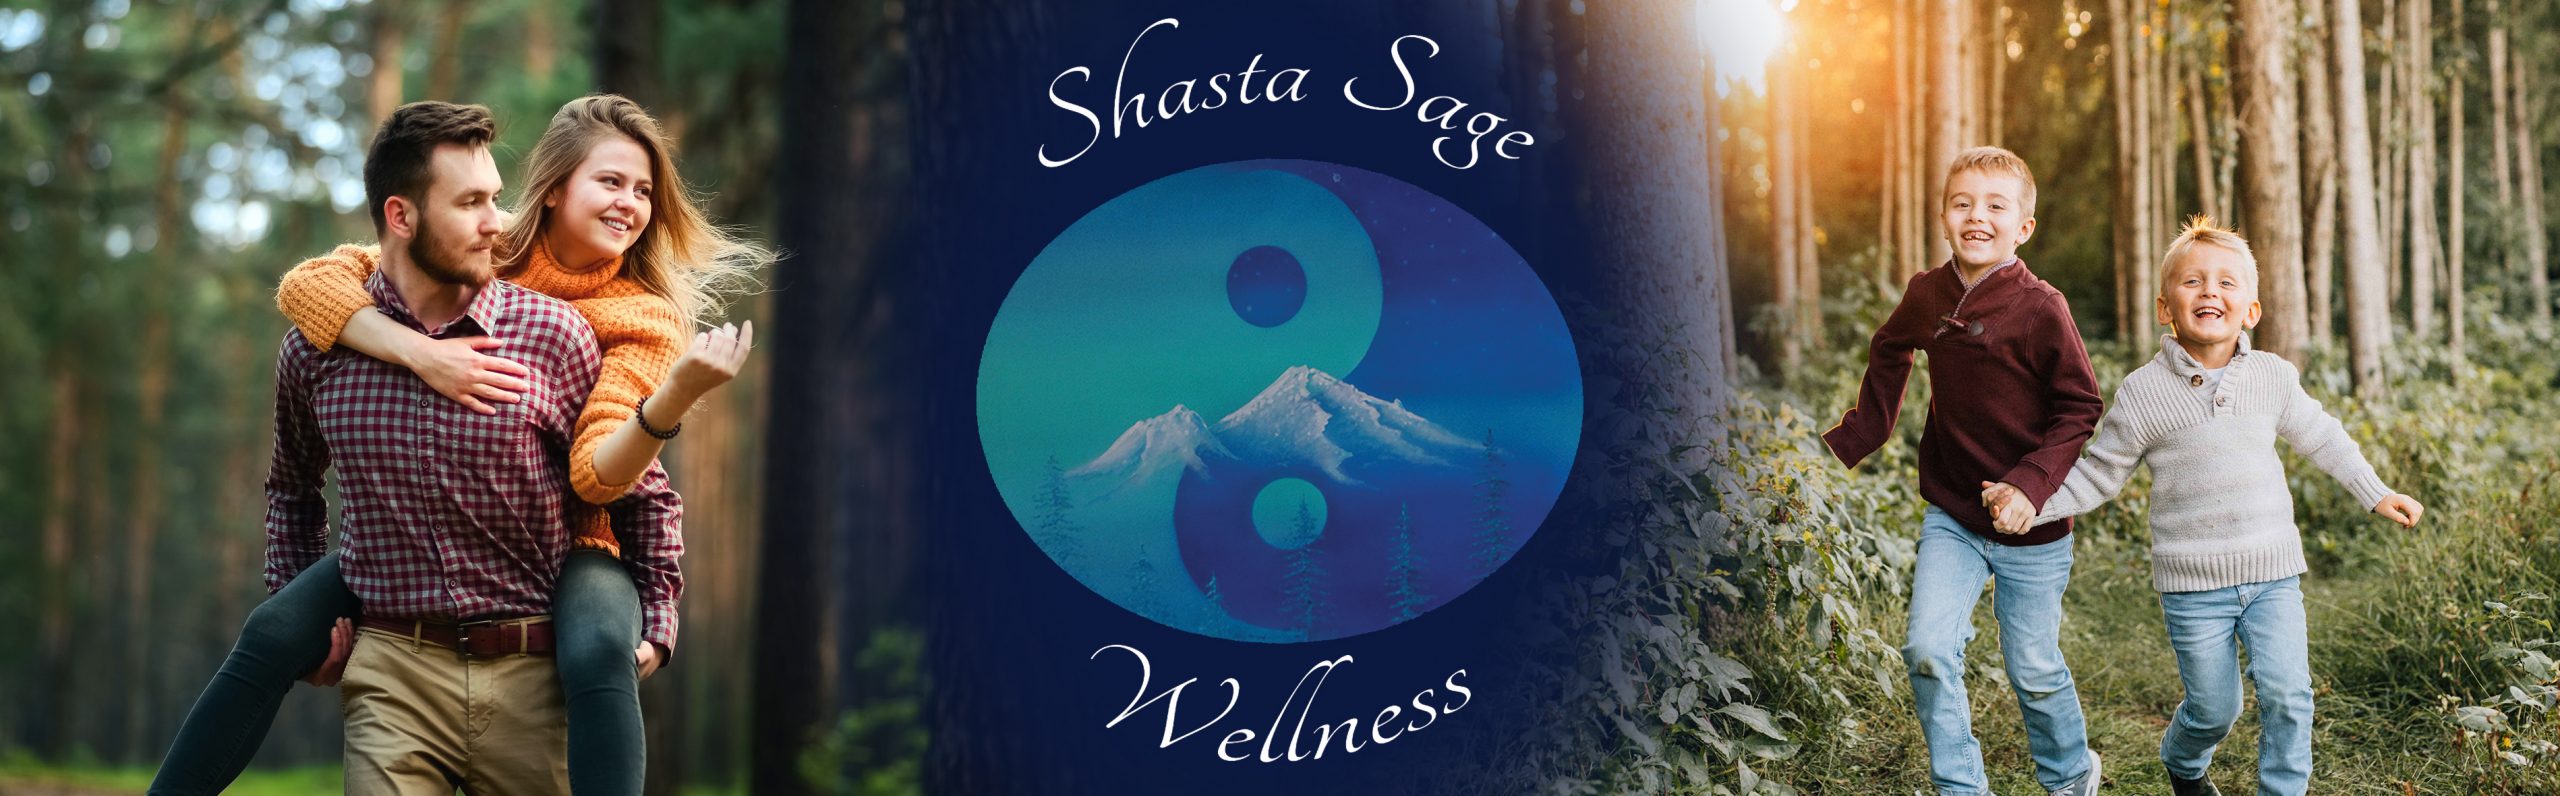 Shasta Sage Wellness Homepage Image Happy People